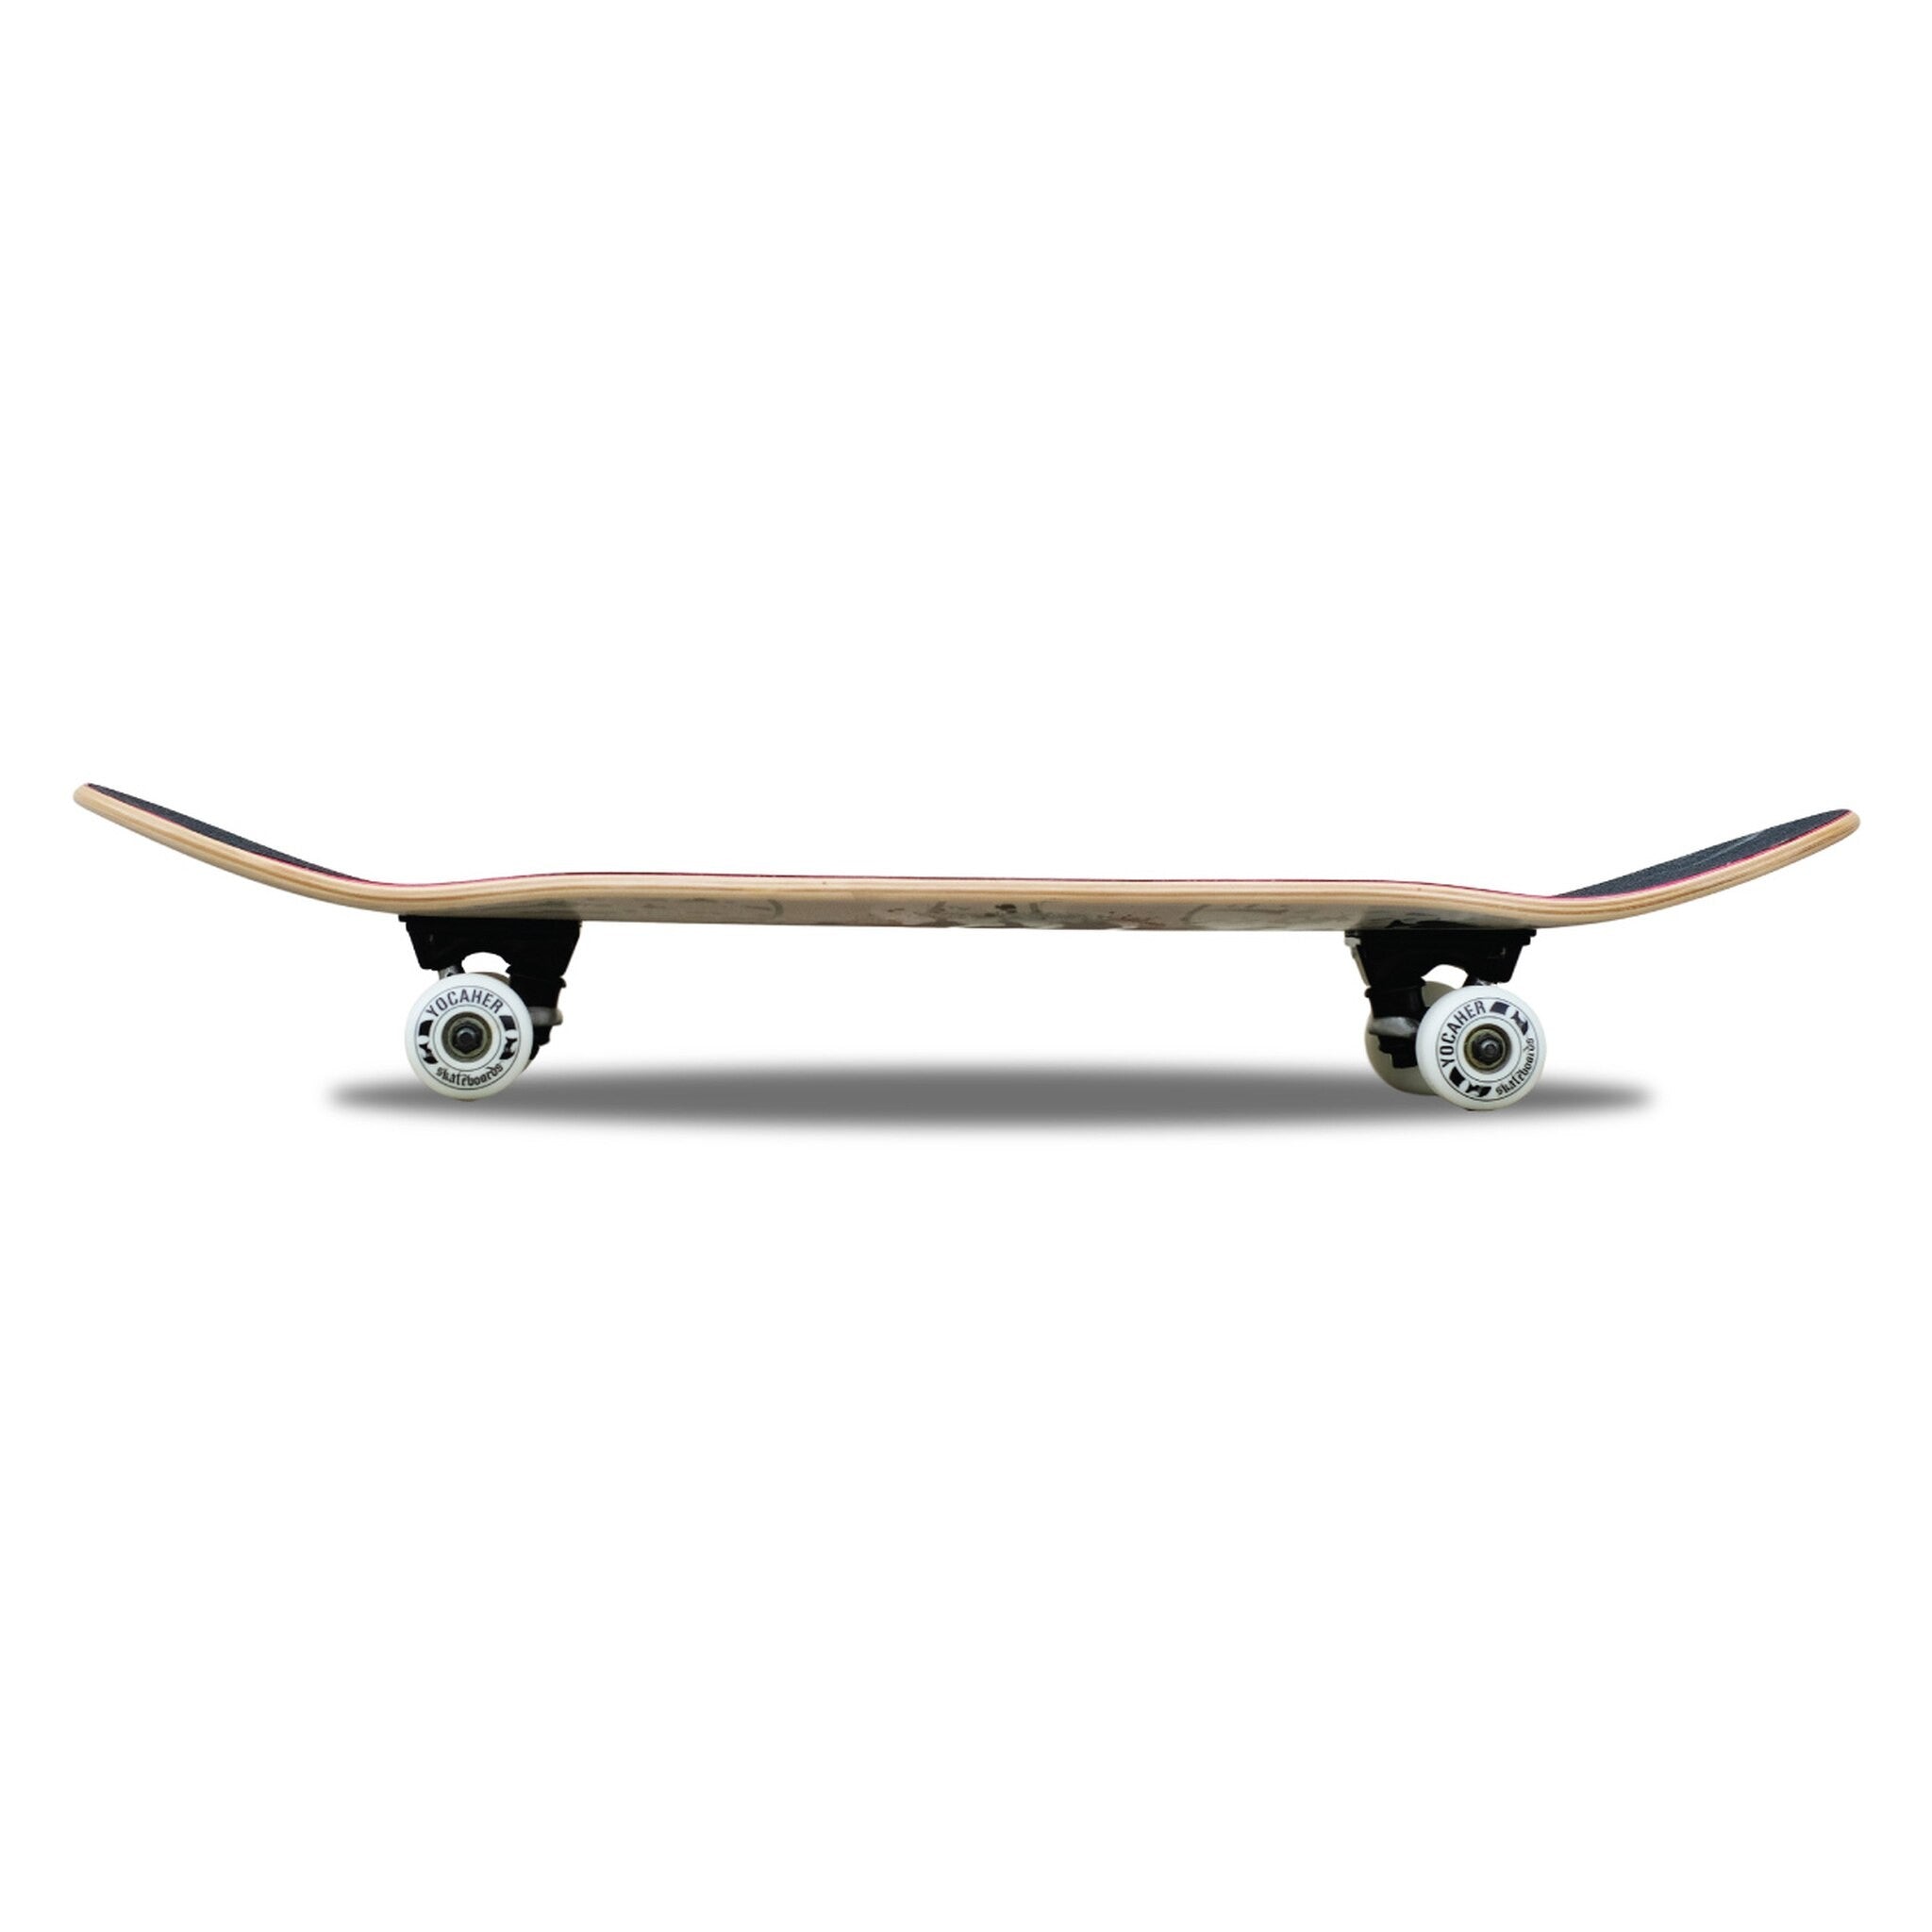 YOCAHER Brawler - Skateboard Street - Planche Complete